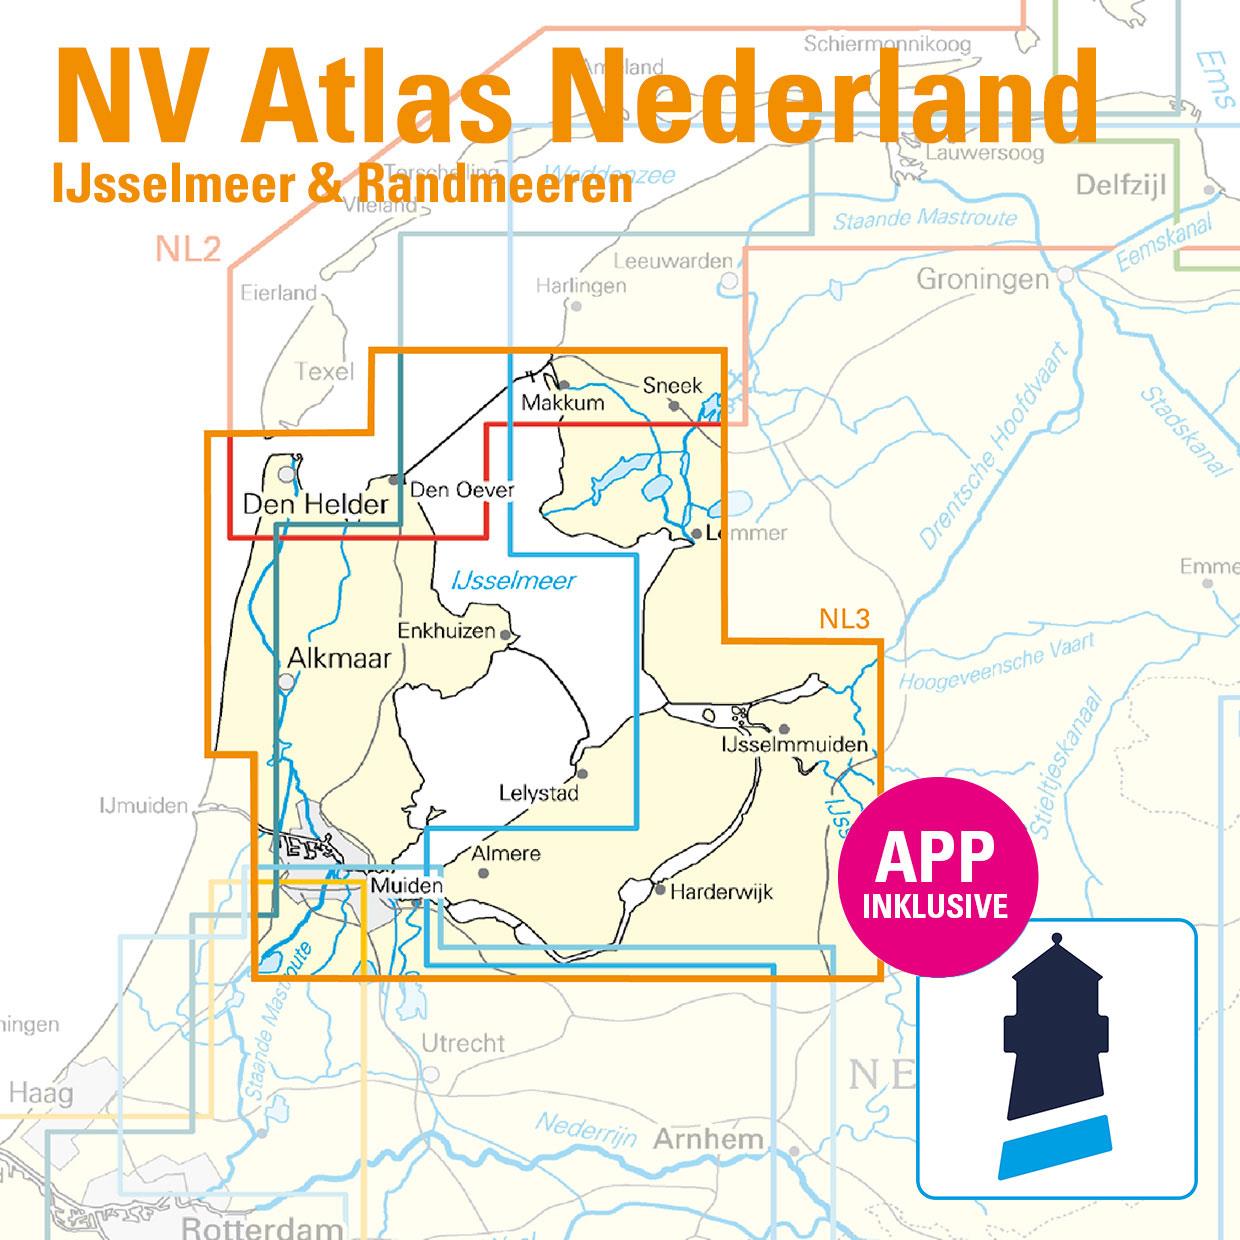 ABO - NV Charts Nederland NL3 - IJsselmeer & Randmeeren